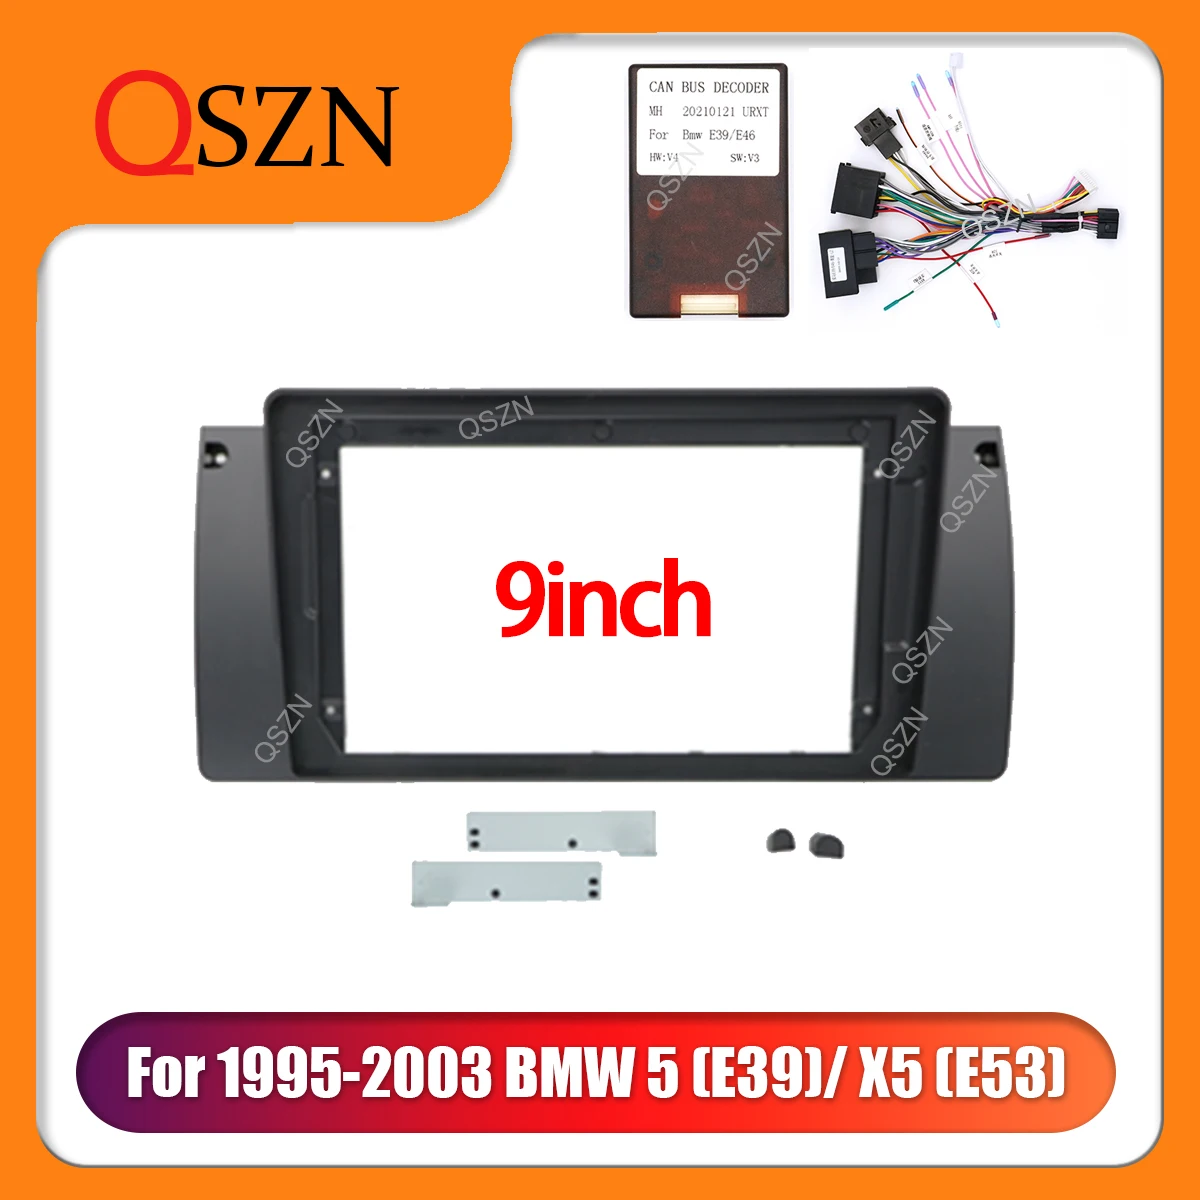 

QSZN 9 inch Car radio Installation Fascias Panel For BMW 5 Series E39 X5 E53 1995-2003 Dash FittingKit ABC Plastic Frame